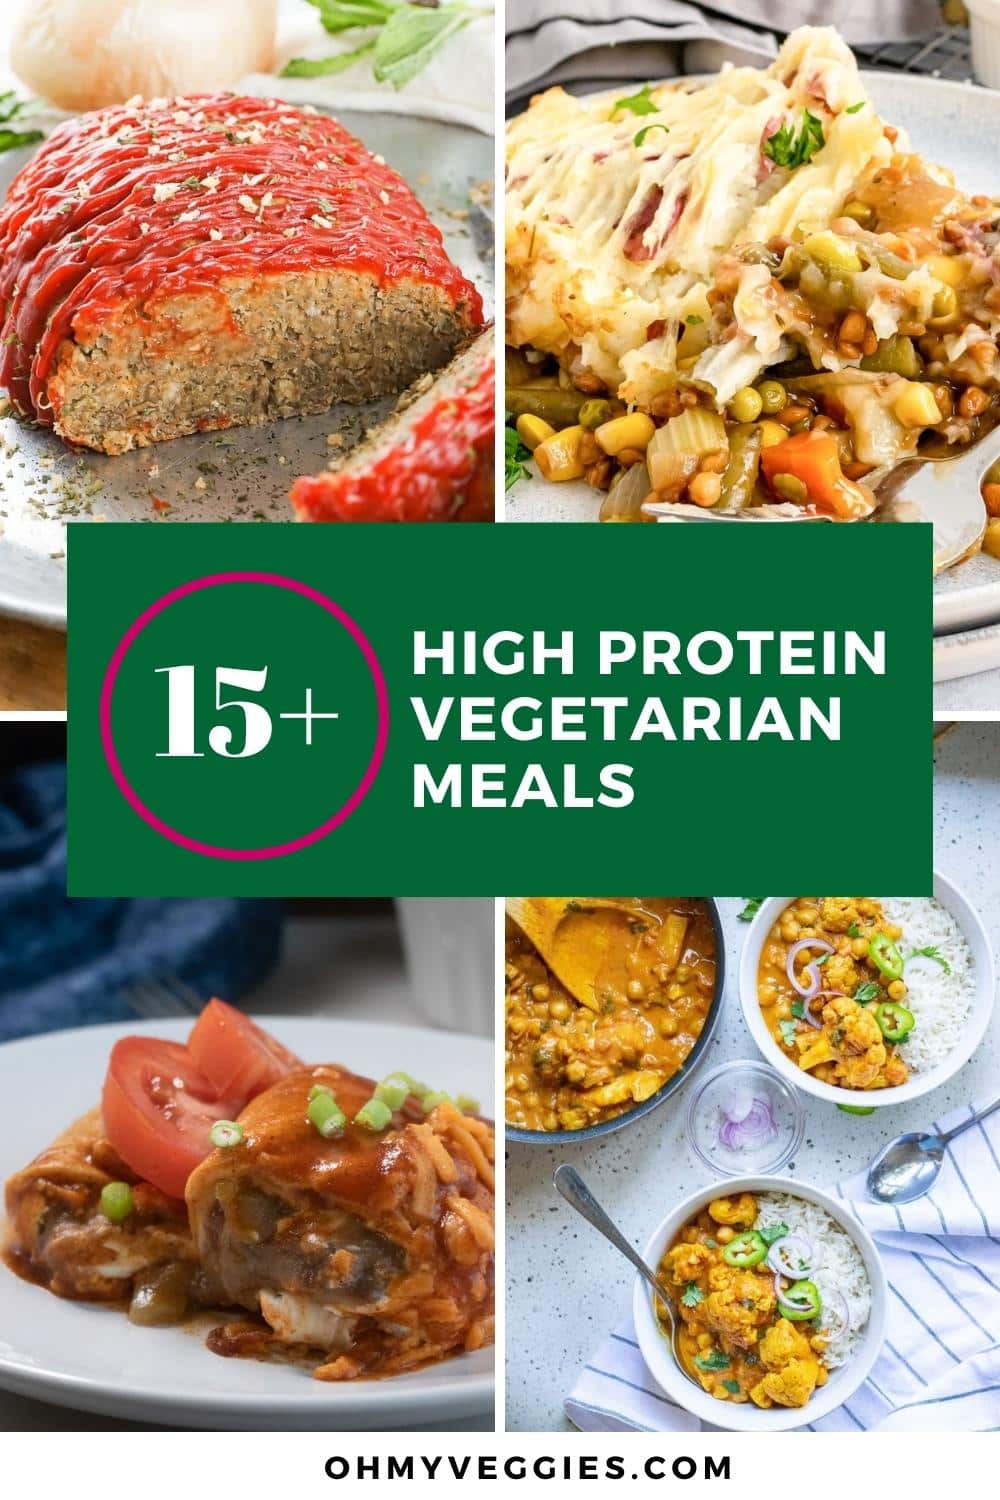 15+ High Protein Vegetarian Meals - Oh My Veggies